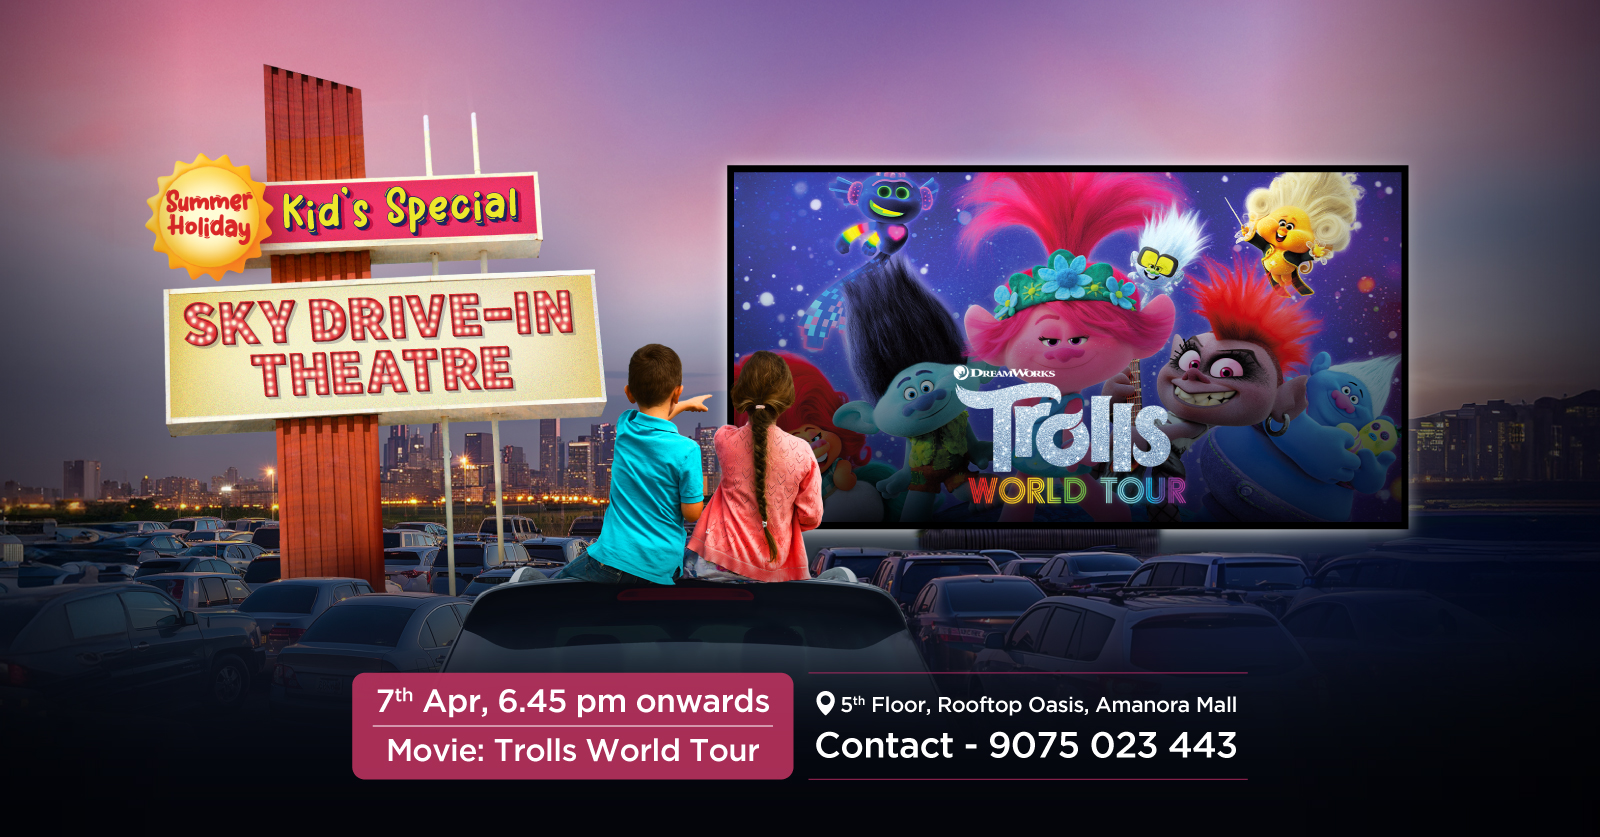 Amanora Sky Drive-In Cinema | Trolls World Tour